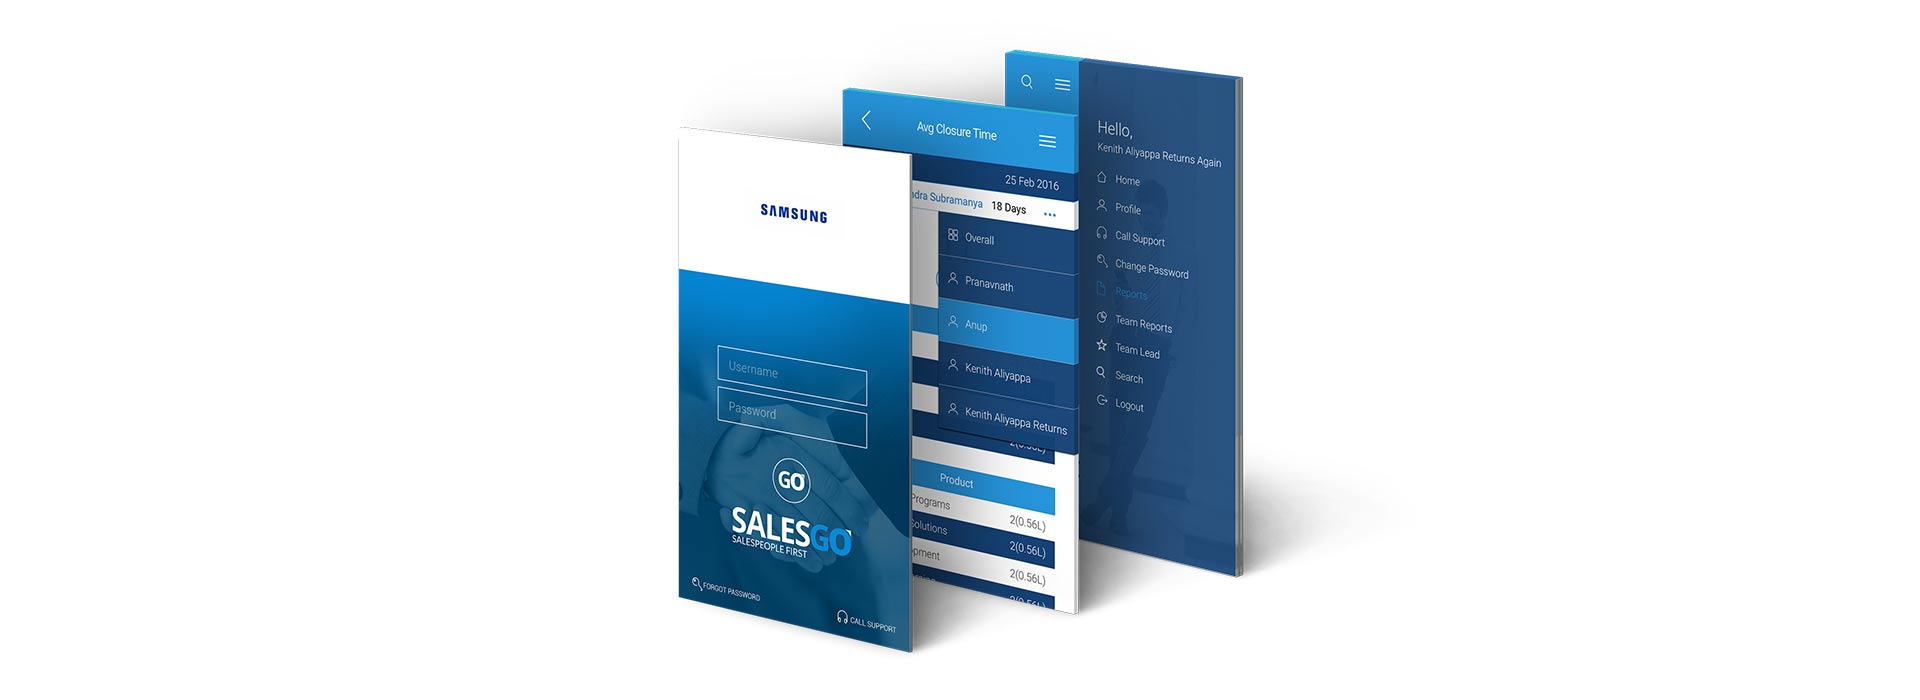 salesgo-mobile-app-design-by-reelslug_2